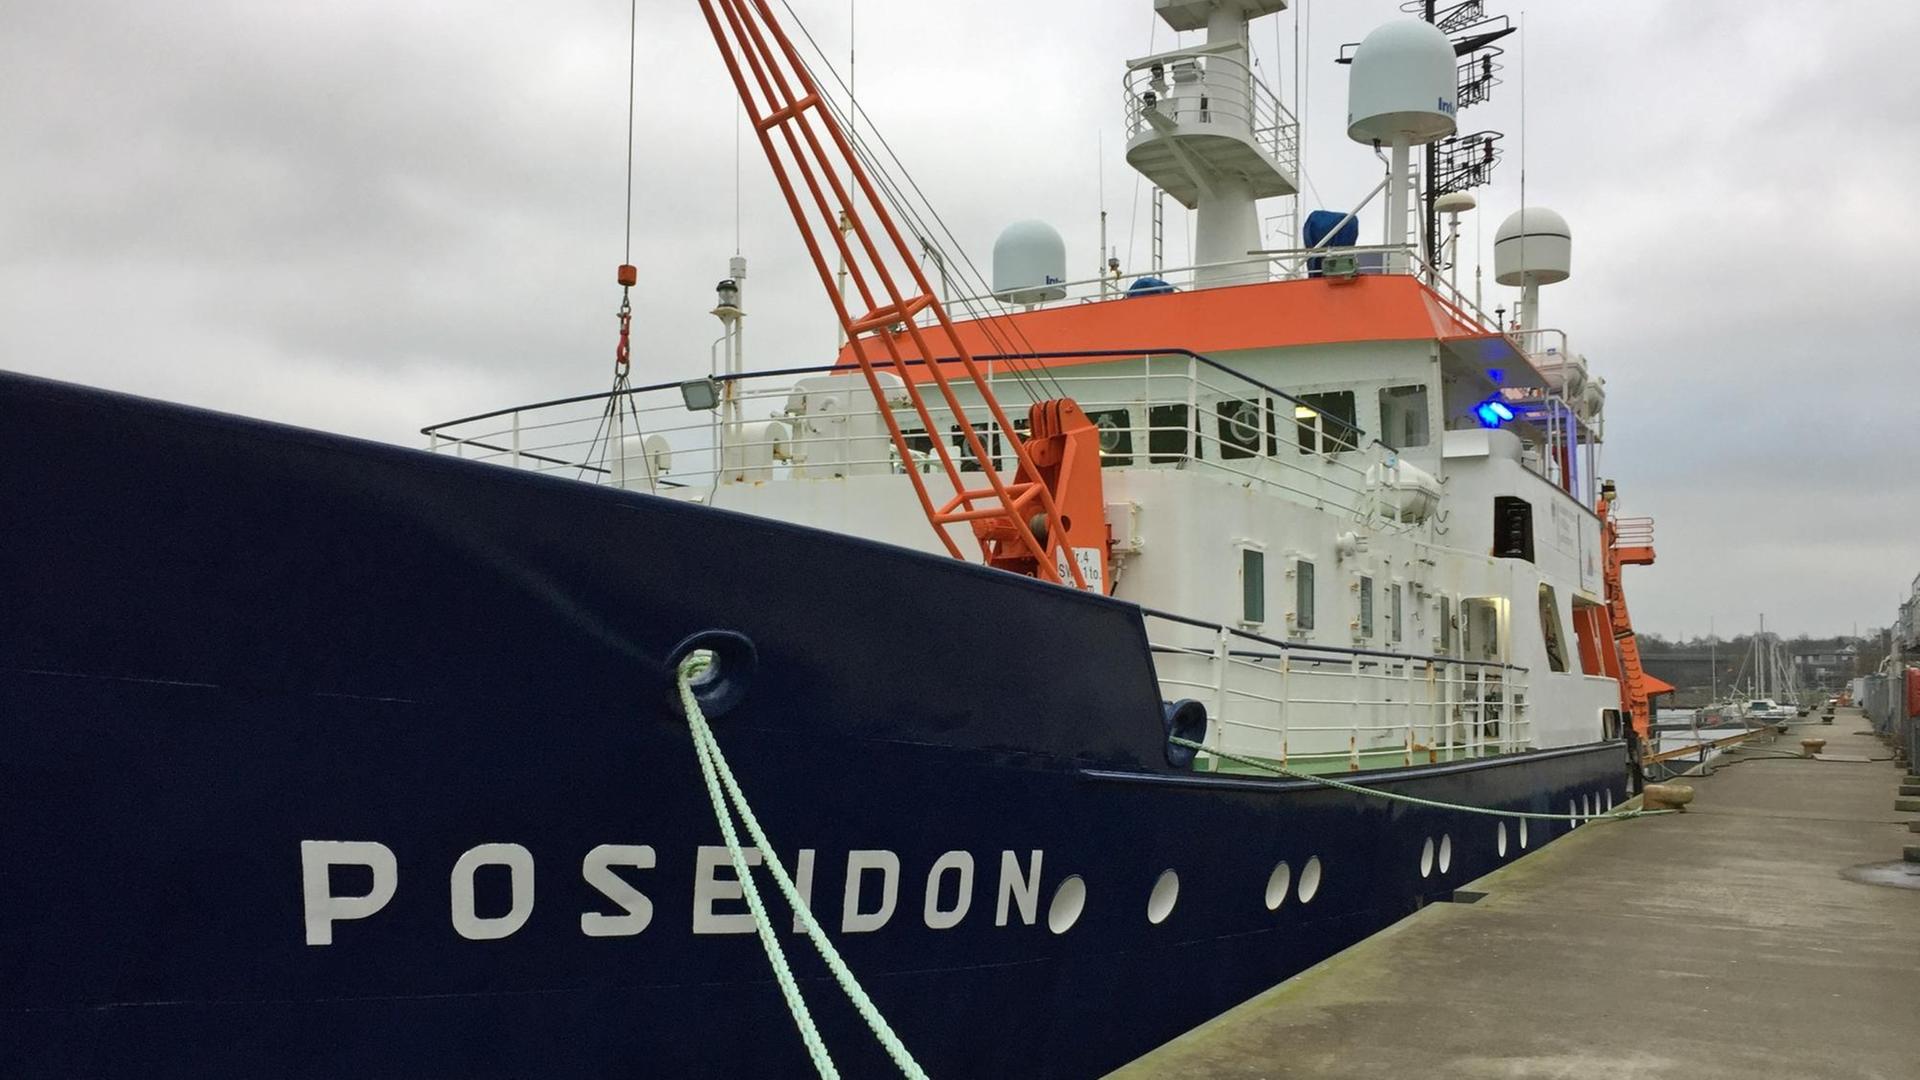 Das ehemalige Forschungsschiff "Poseidon" in Kiel